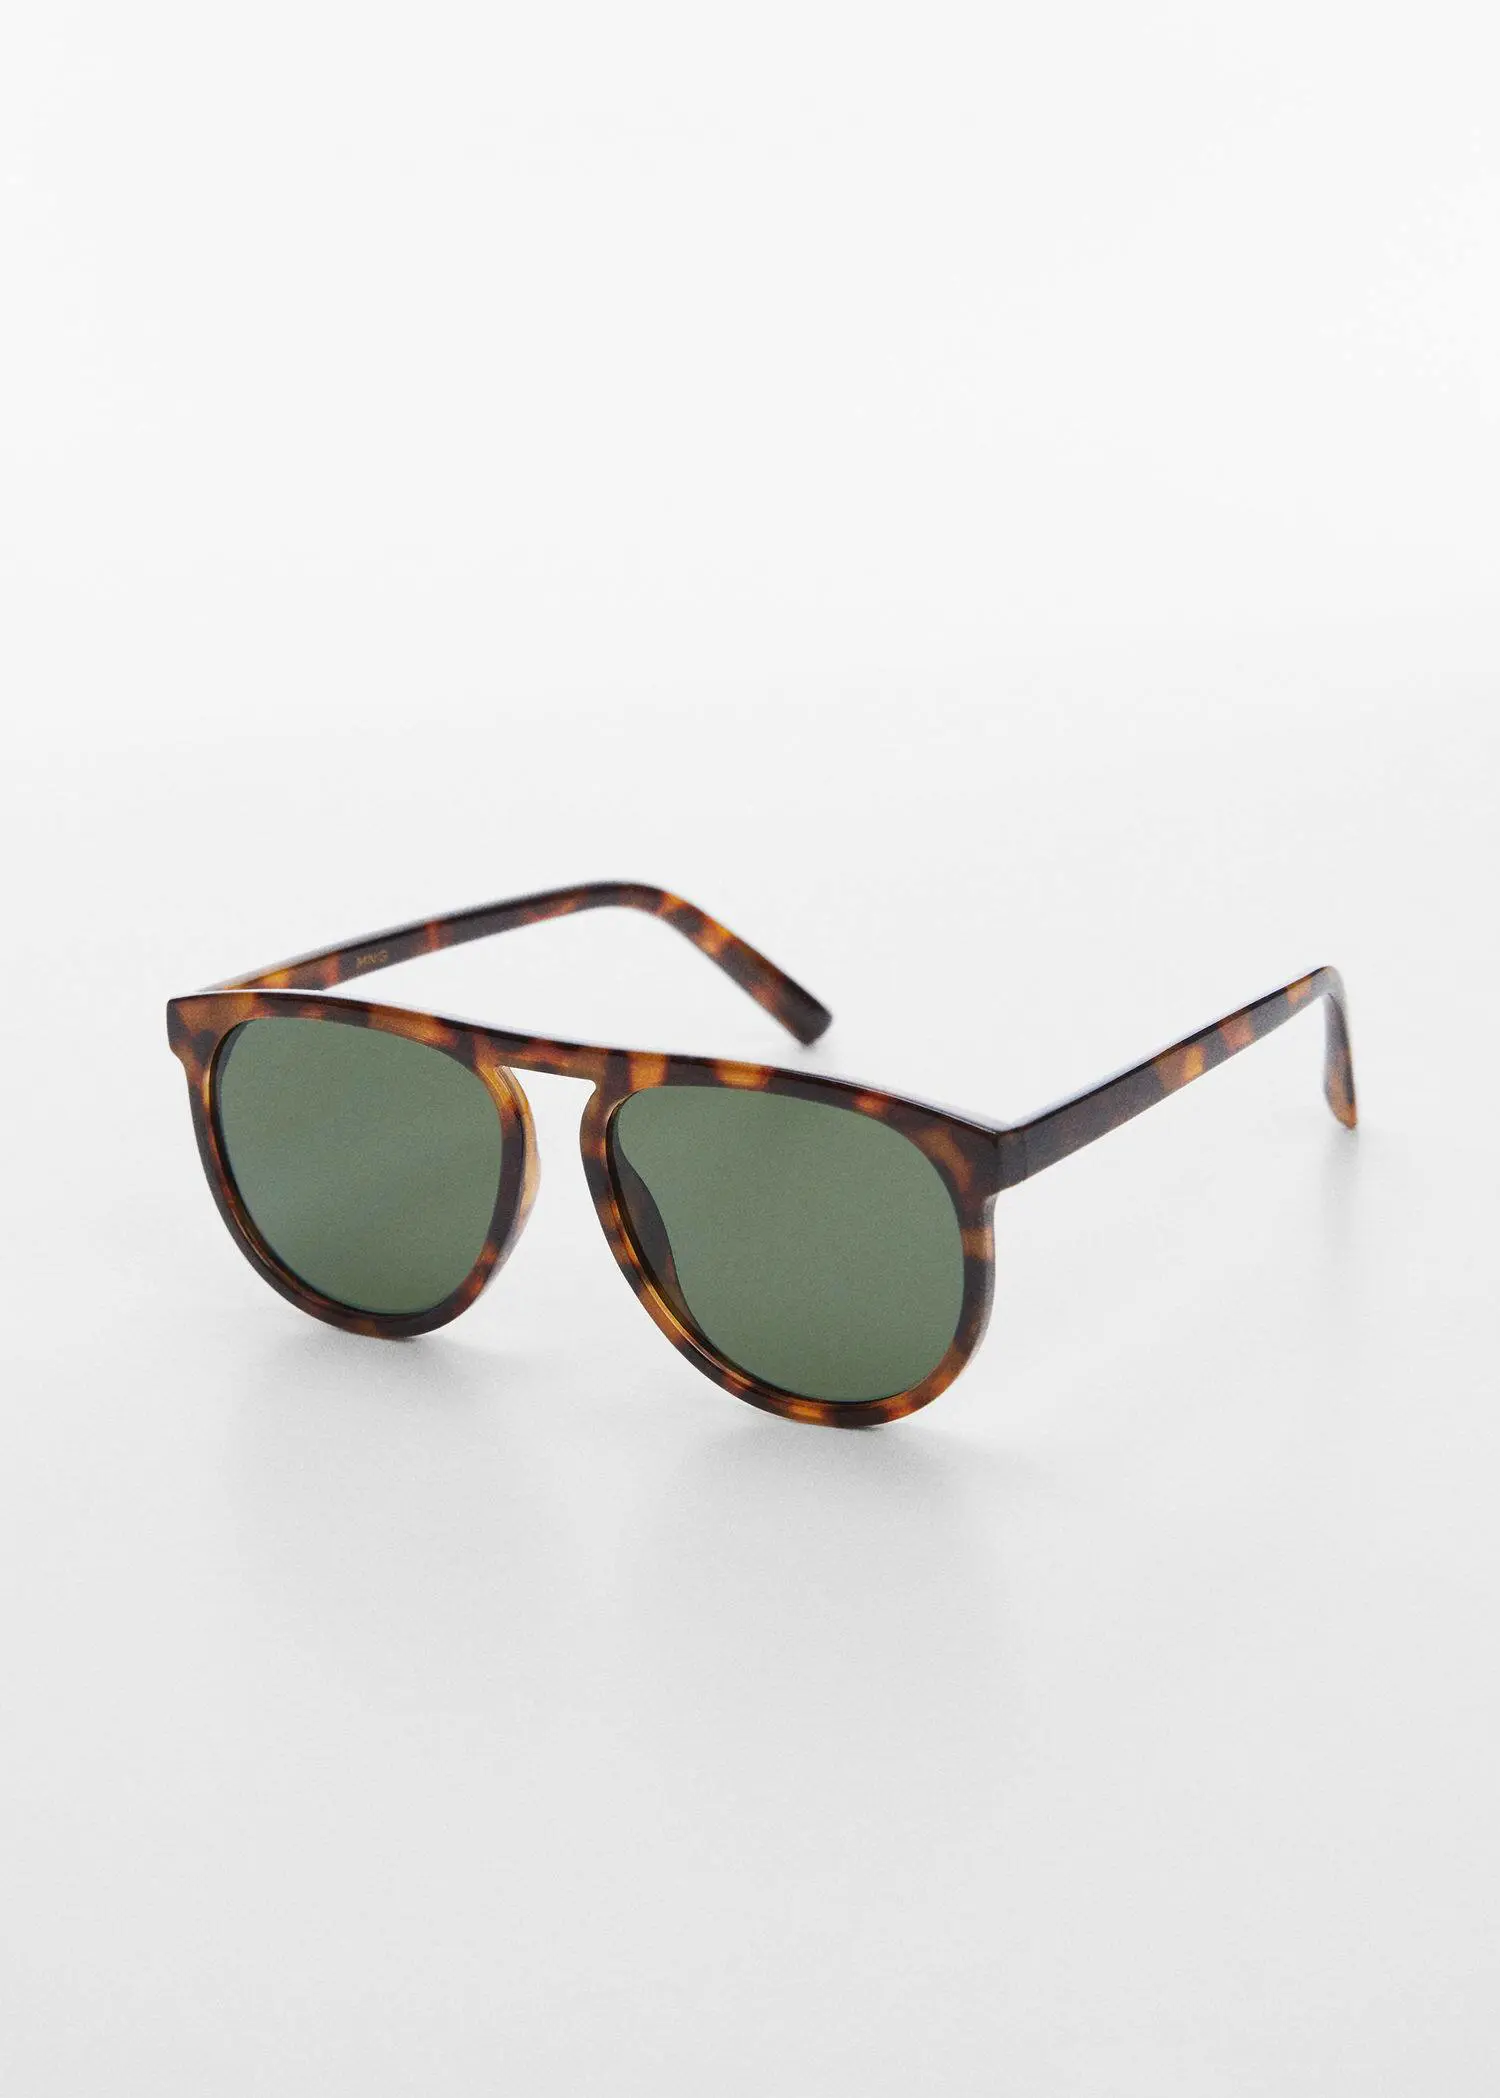 Mango Polarised sunglasses. a pair of sun glasses on a white surface 